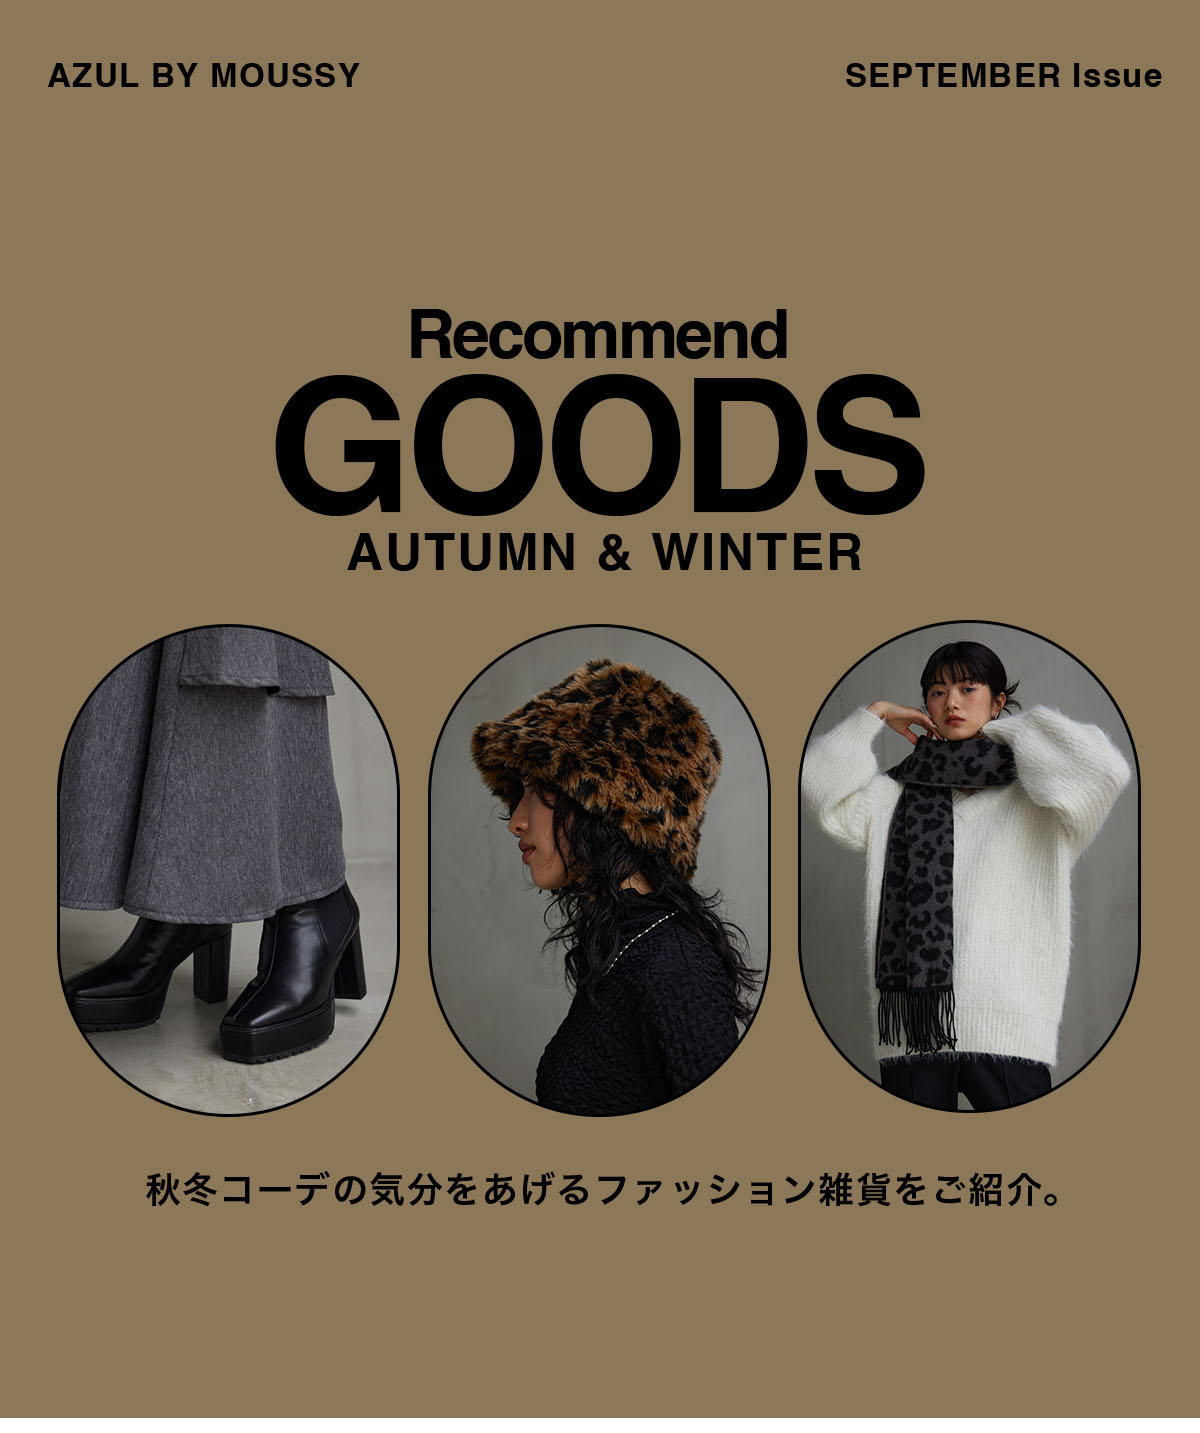 Recmmend GOODS AUTUMN & WINTER／AZUL BY MOUSSY 秋冬コーデの気分を上げるファッション雑貨をご紹介